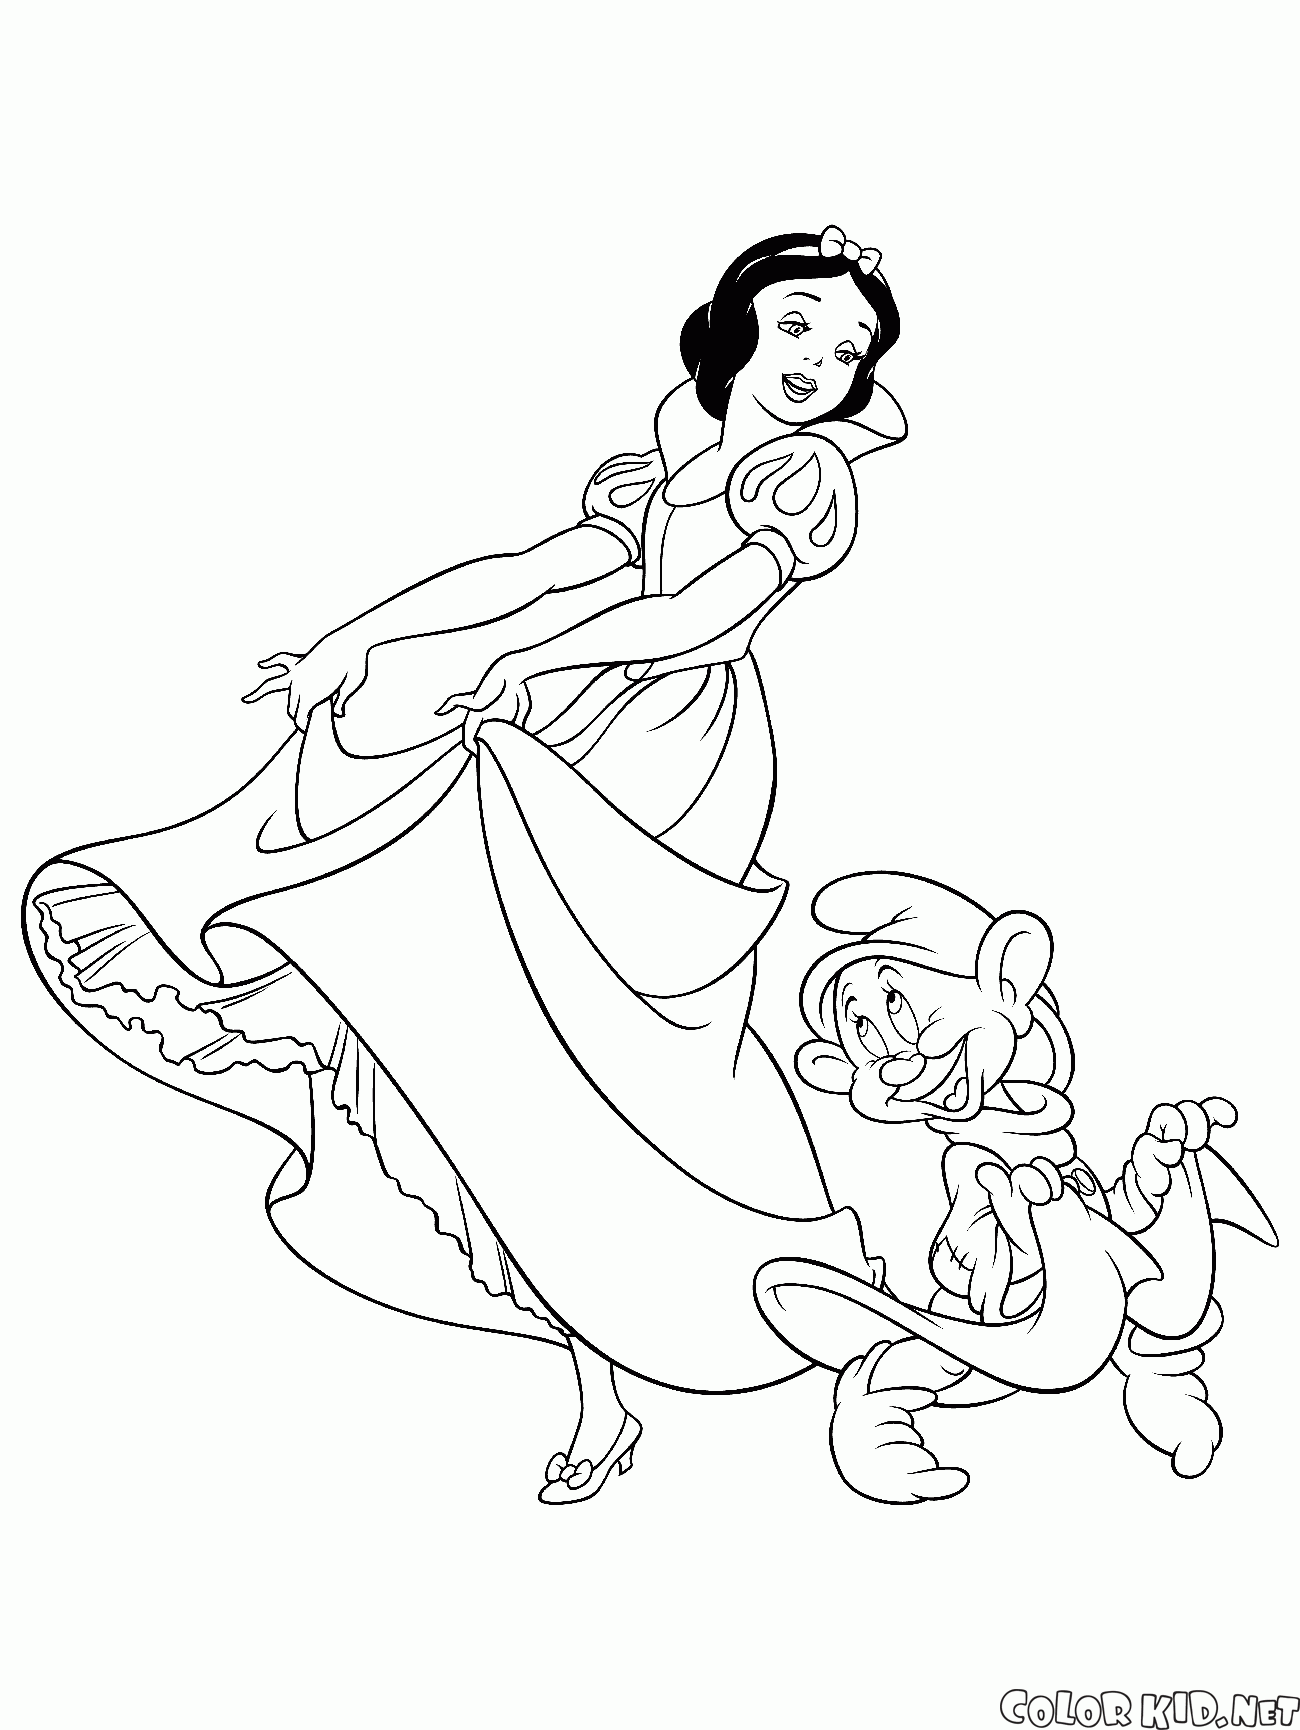 Snow White dances with a Dwarf